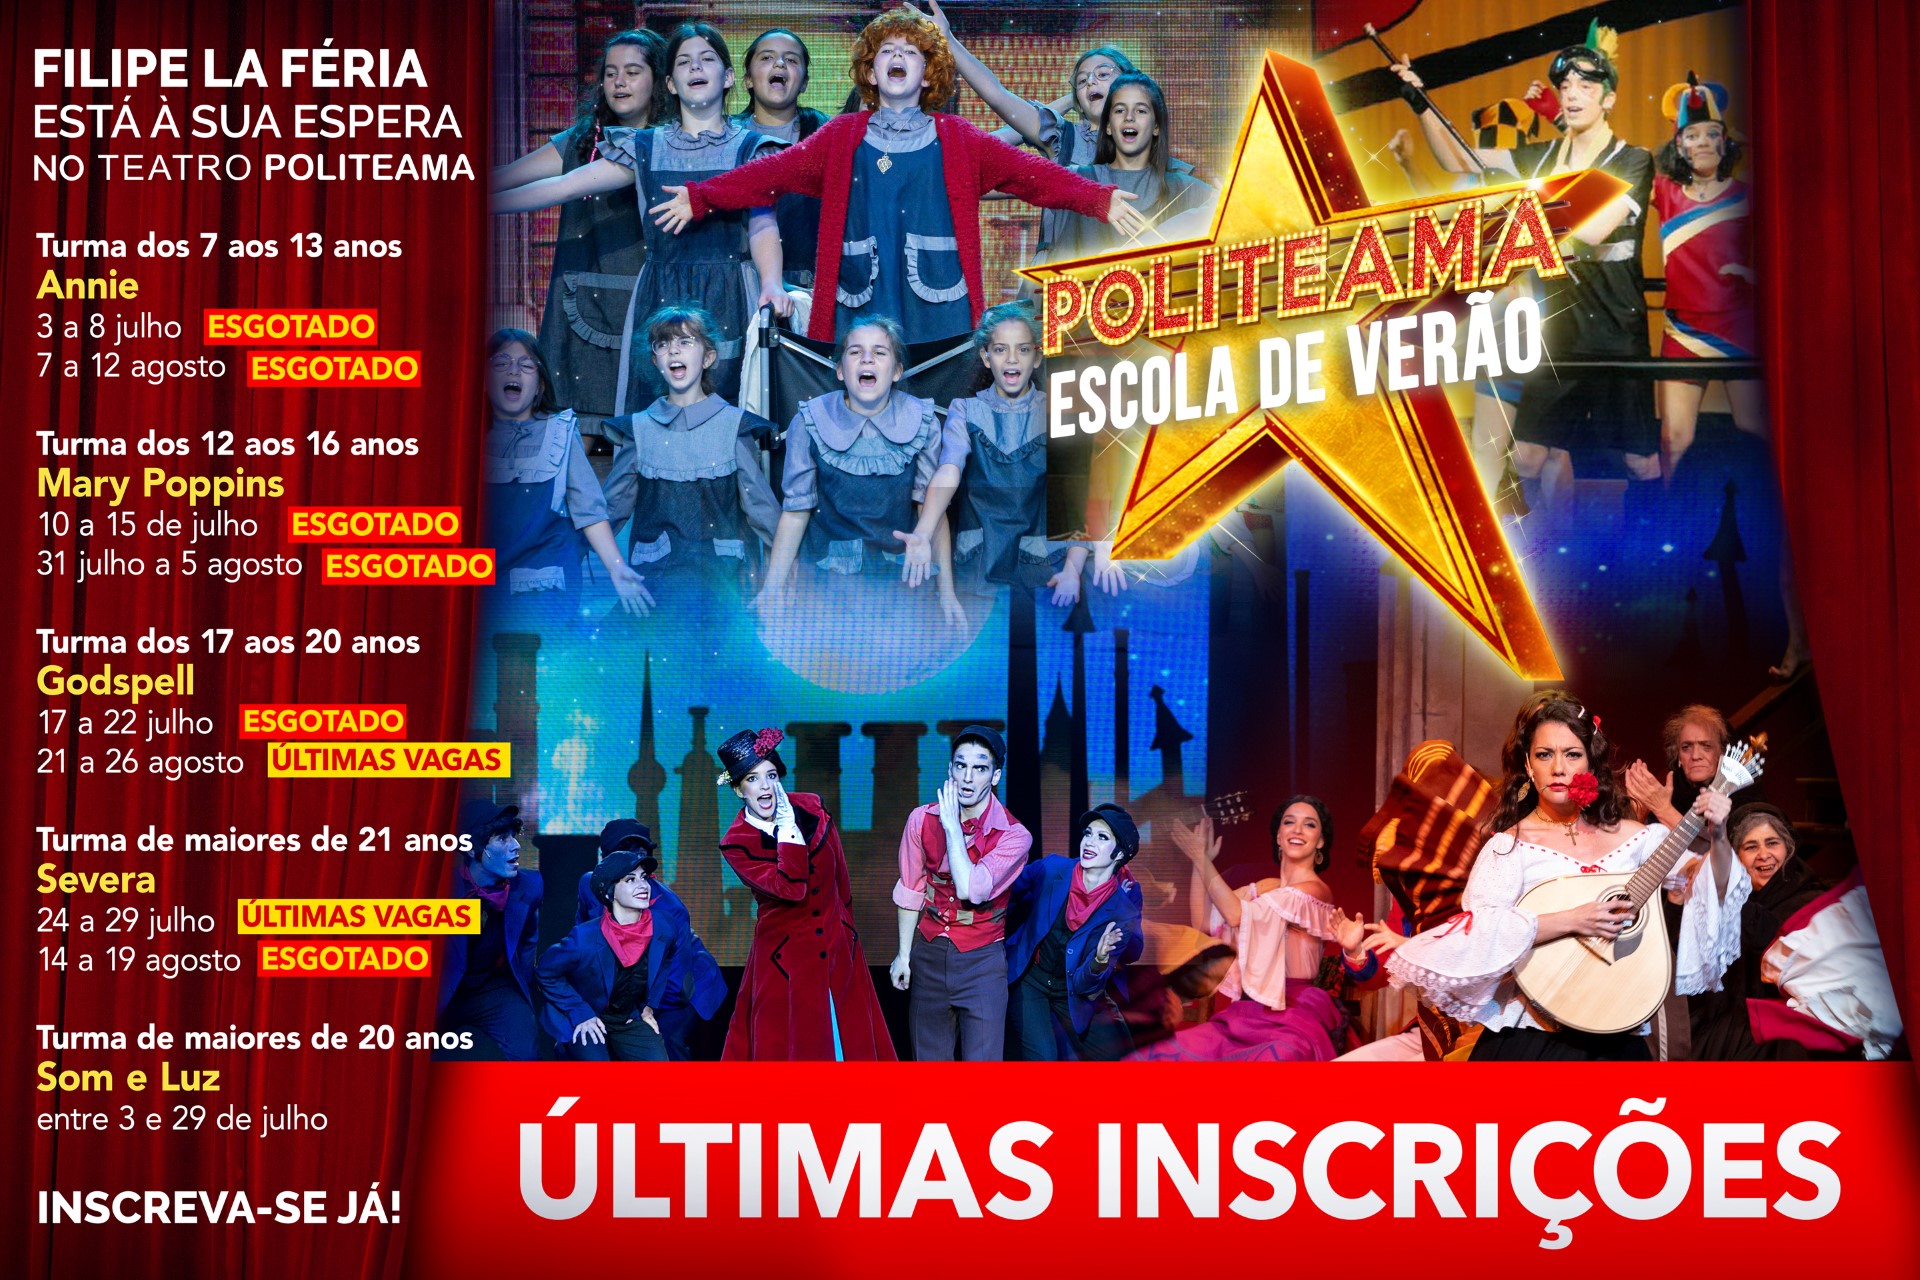 Filipe La Féria ensina Teatro Musical a 300 alunos no Teatro Politeama